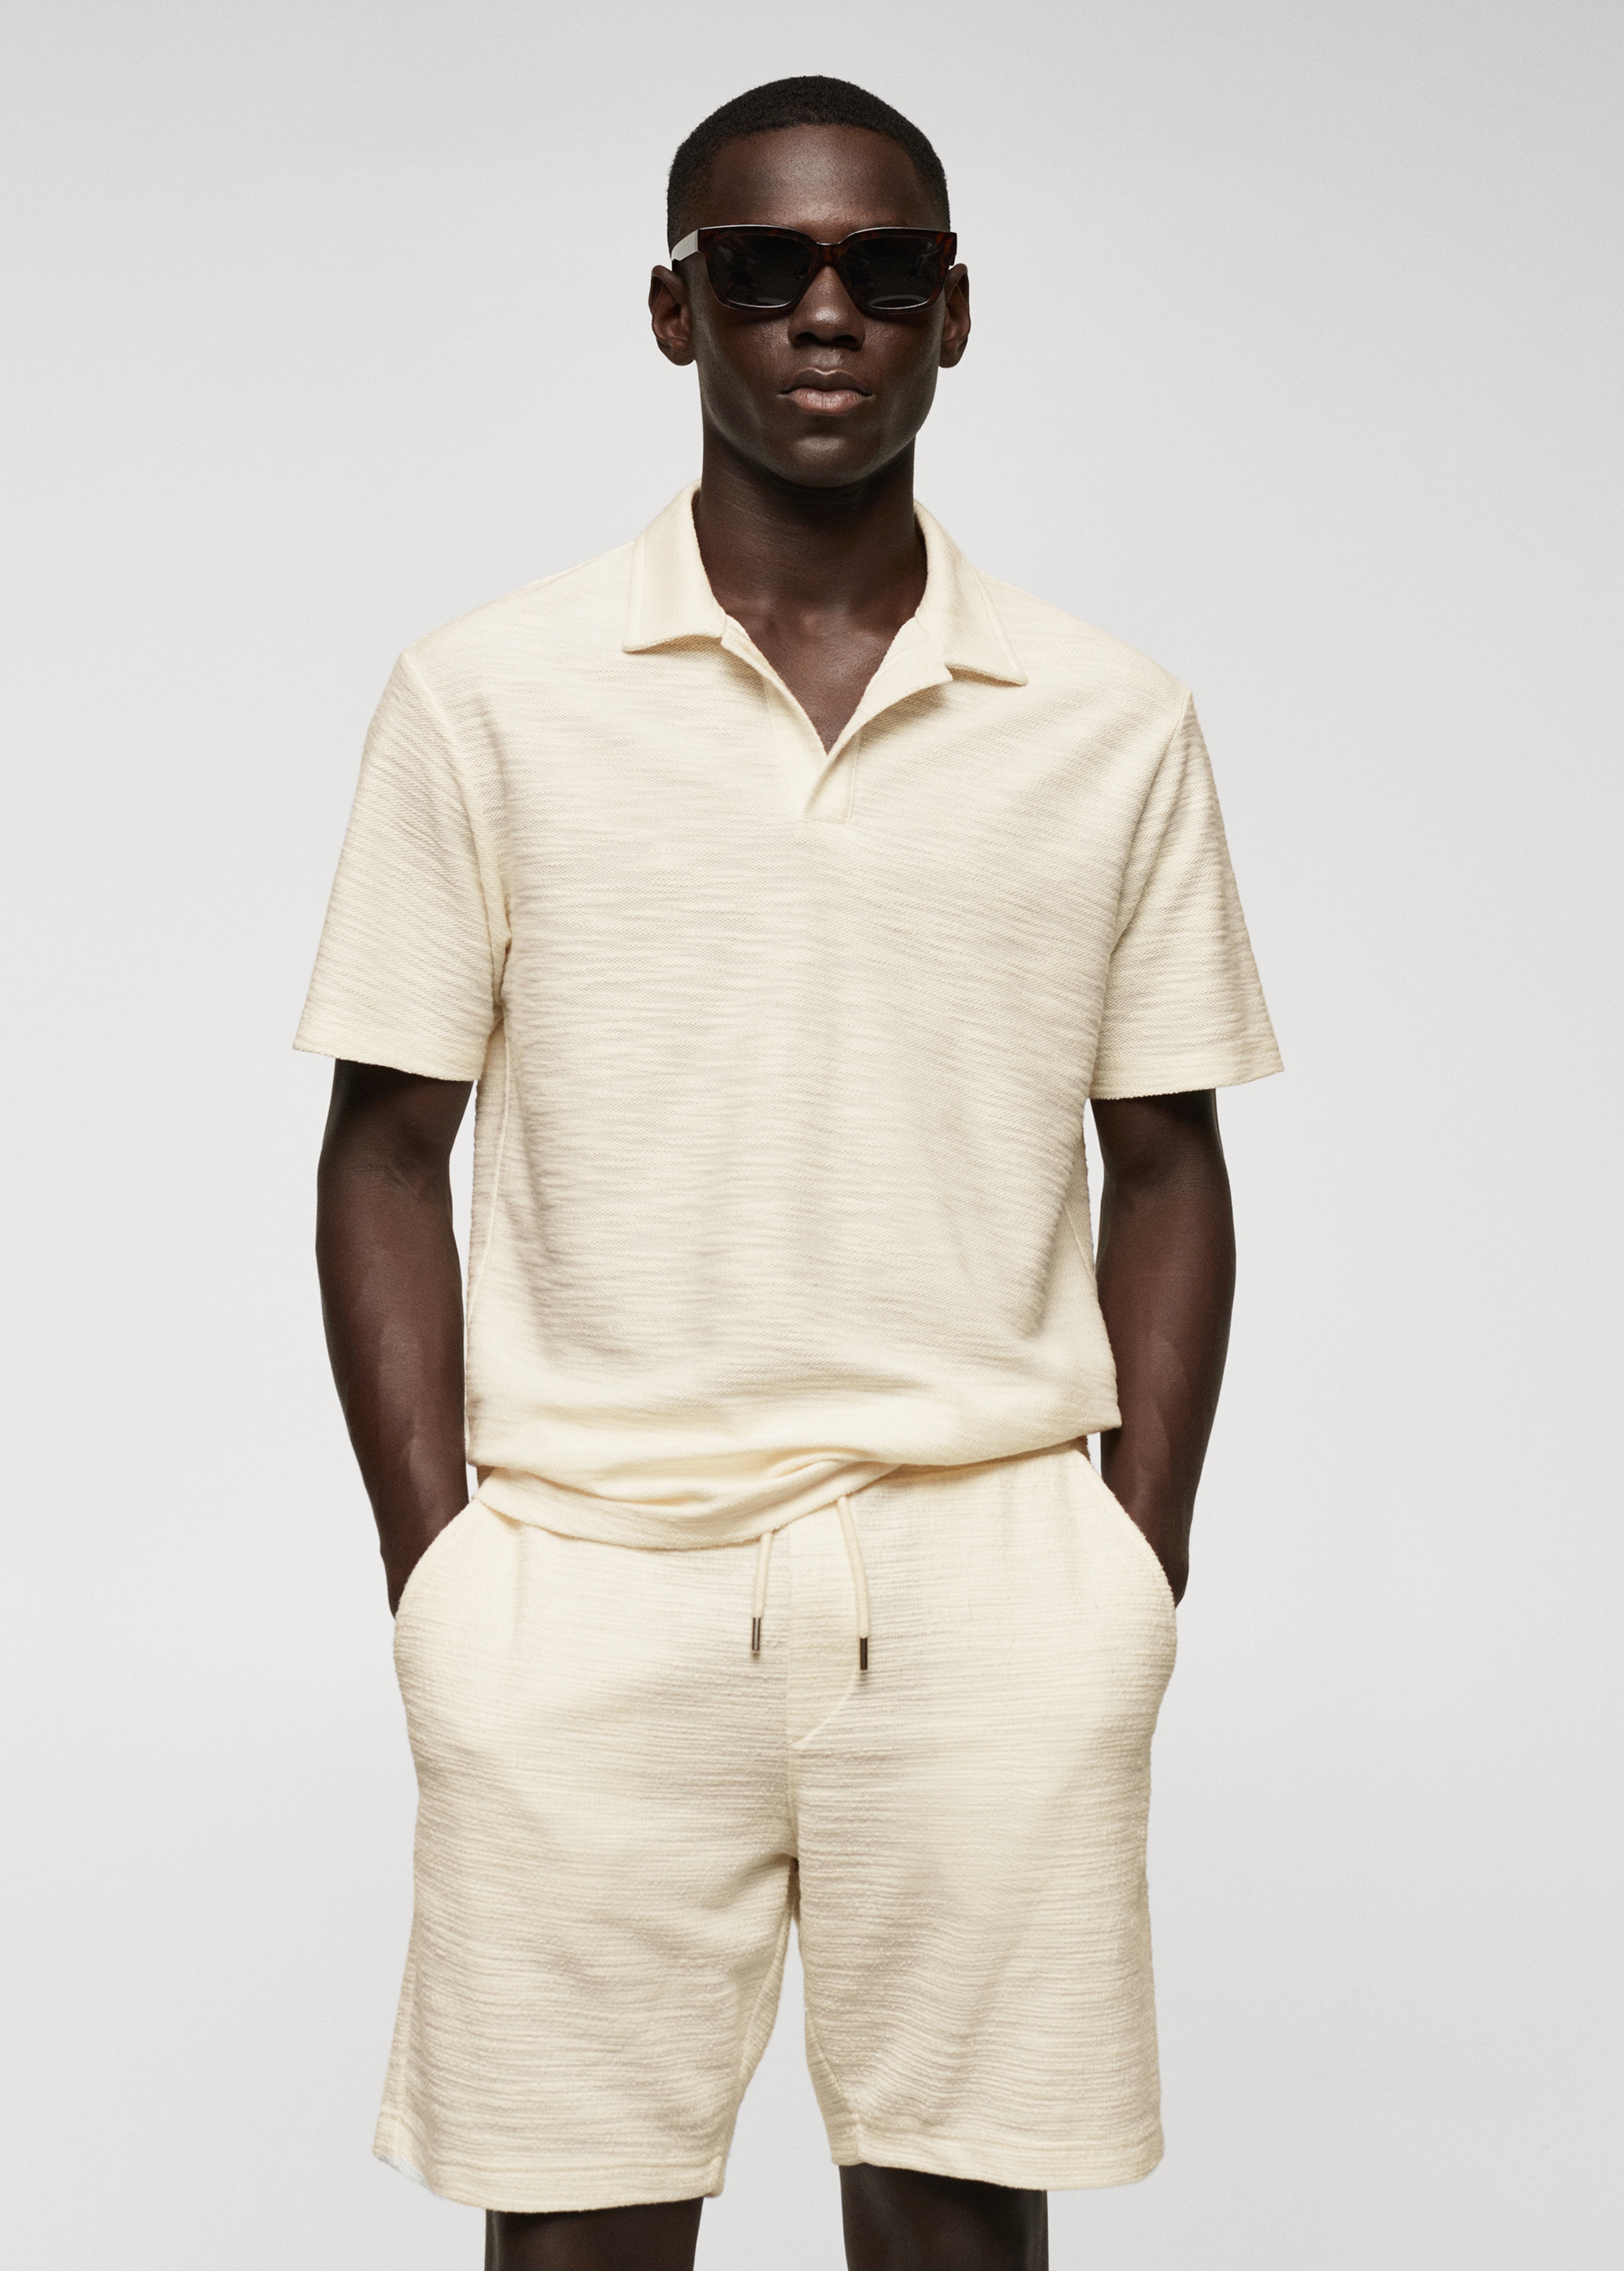 Bowling-collar structured polo shirt  - Medium plane